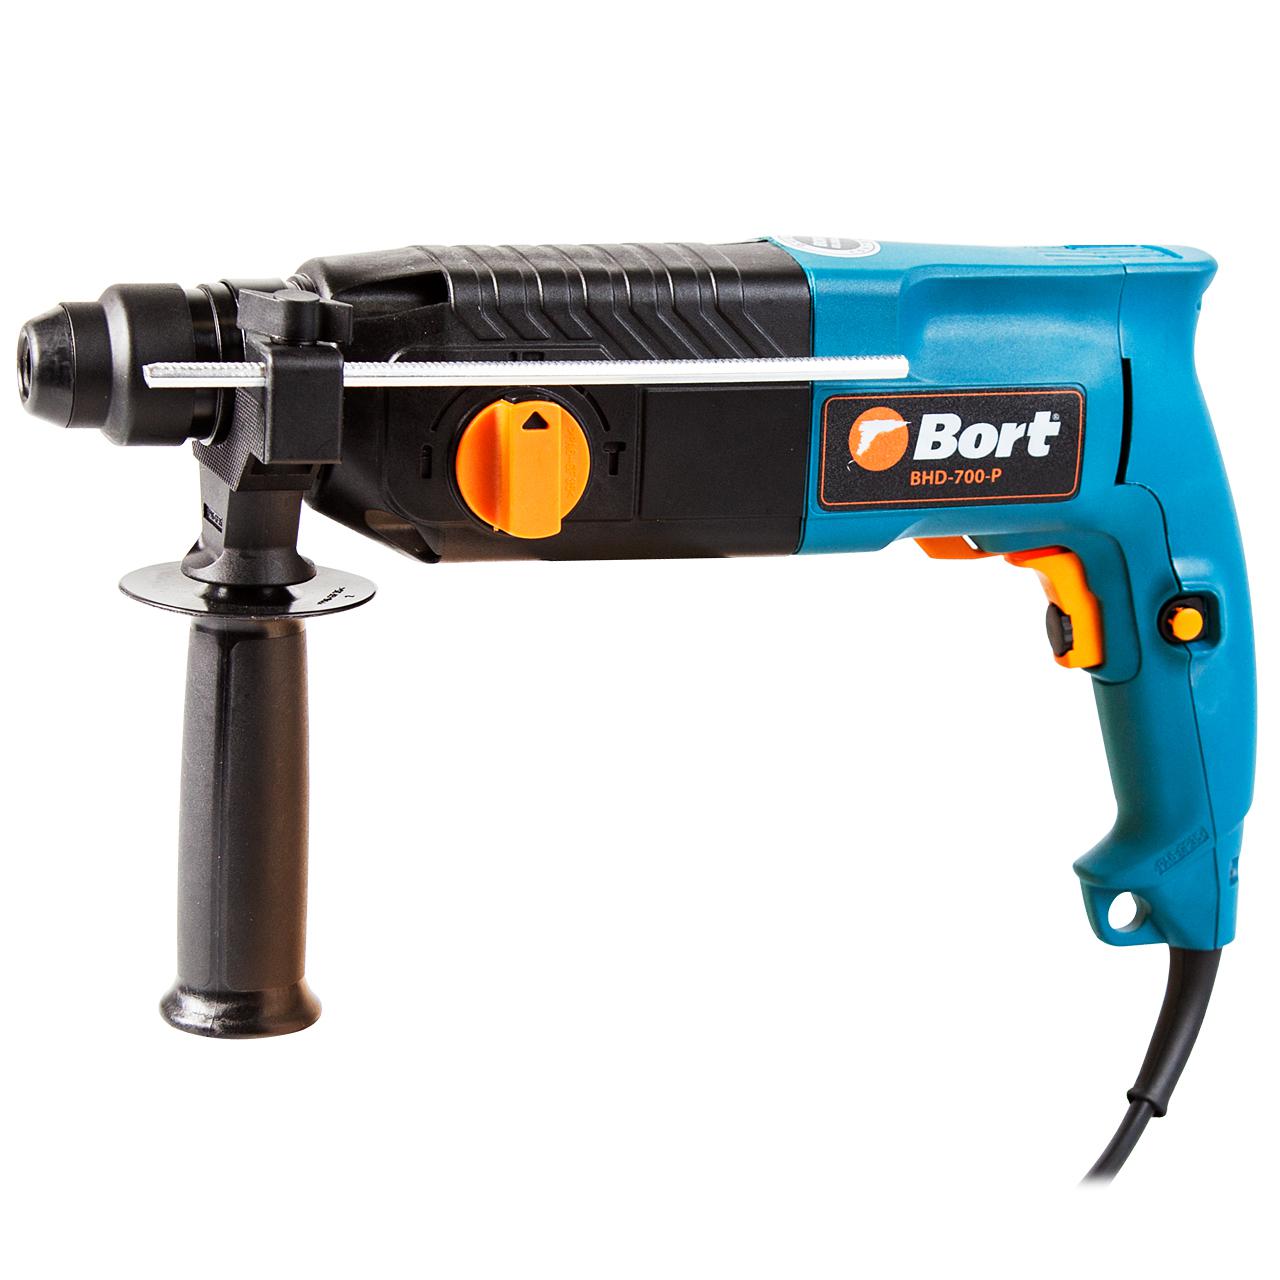  Bort BHD-700-P (91270696)